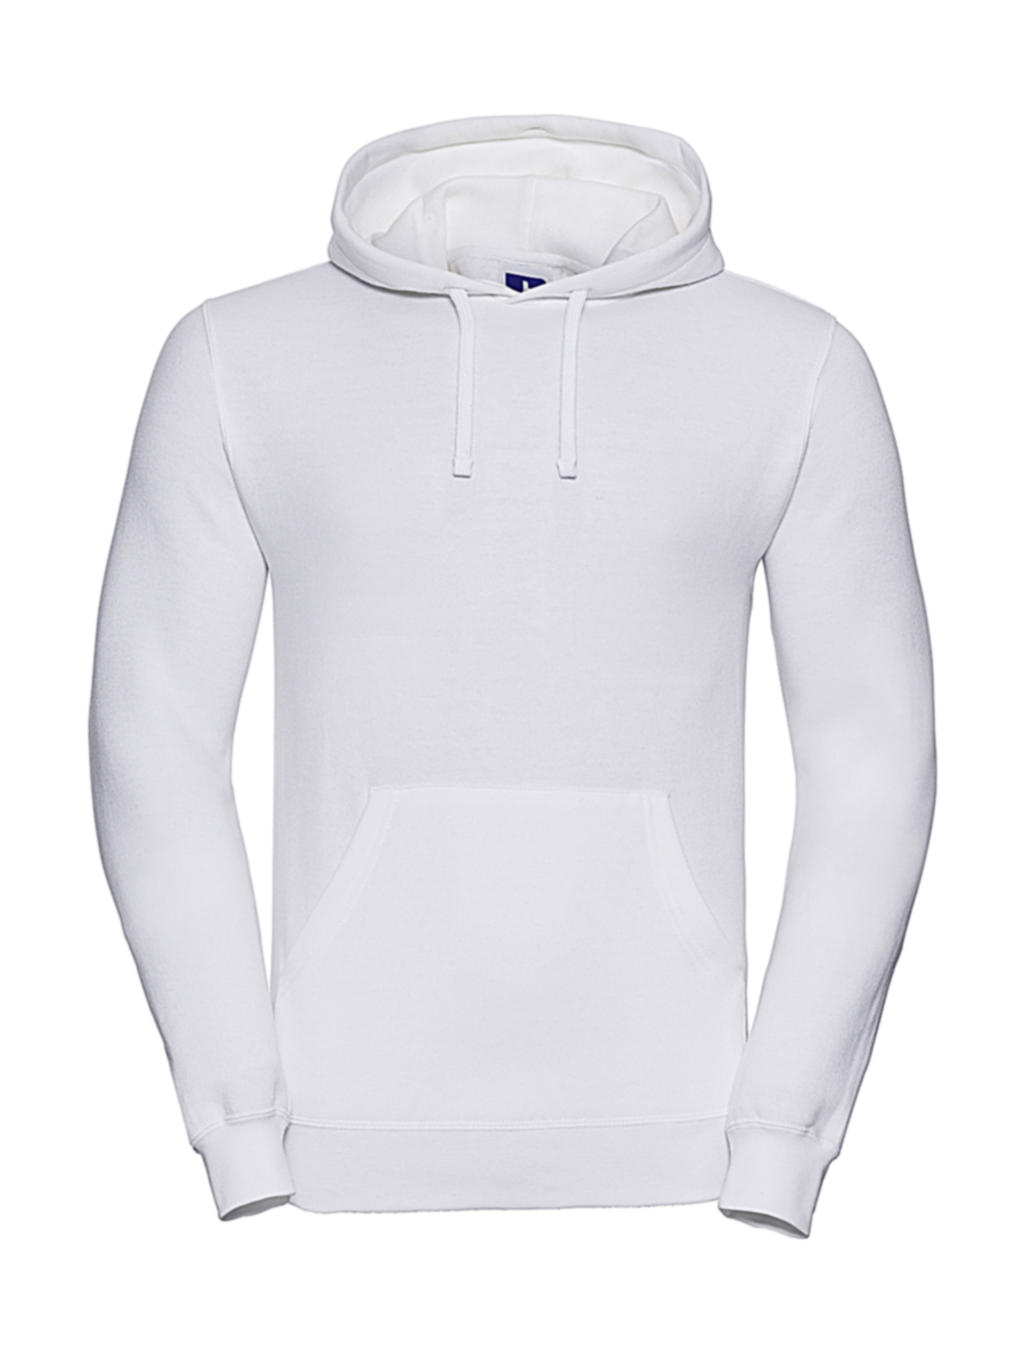  Hooded Sweatshirt in Farbe White